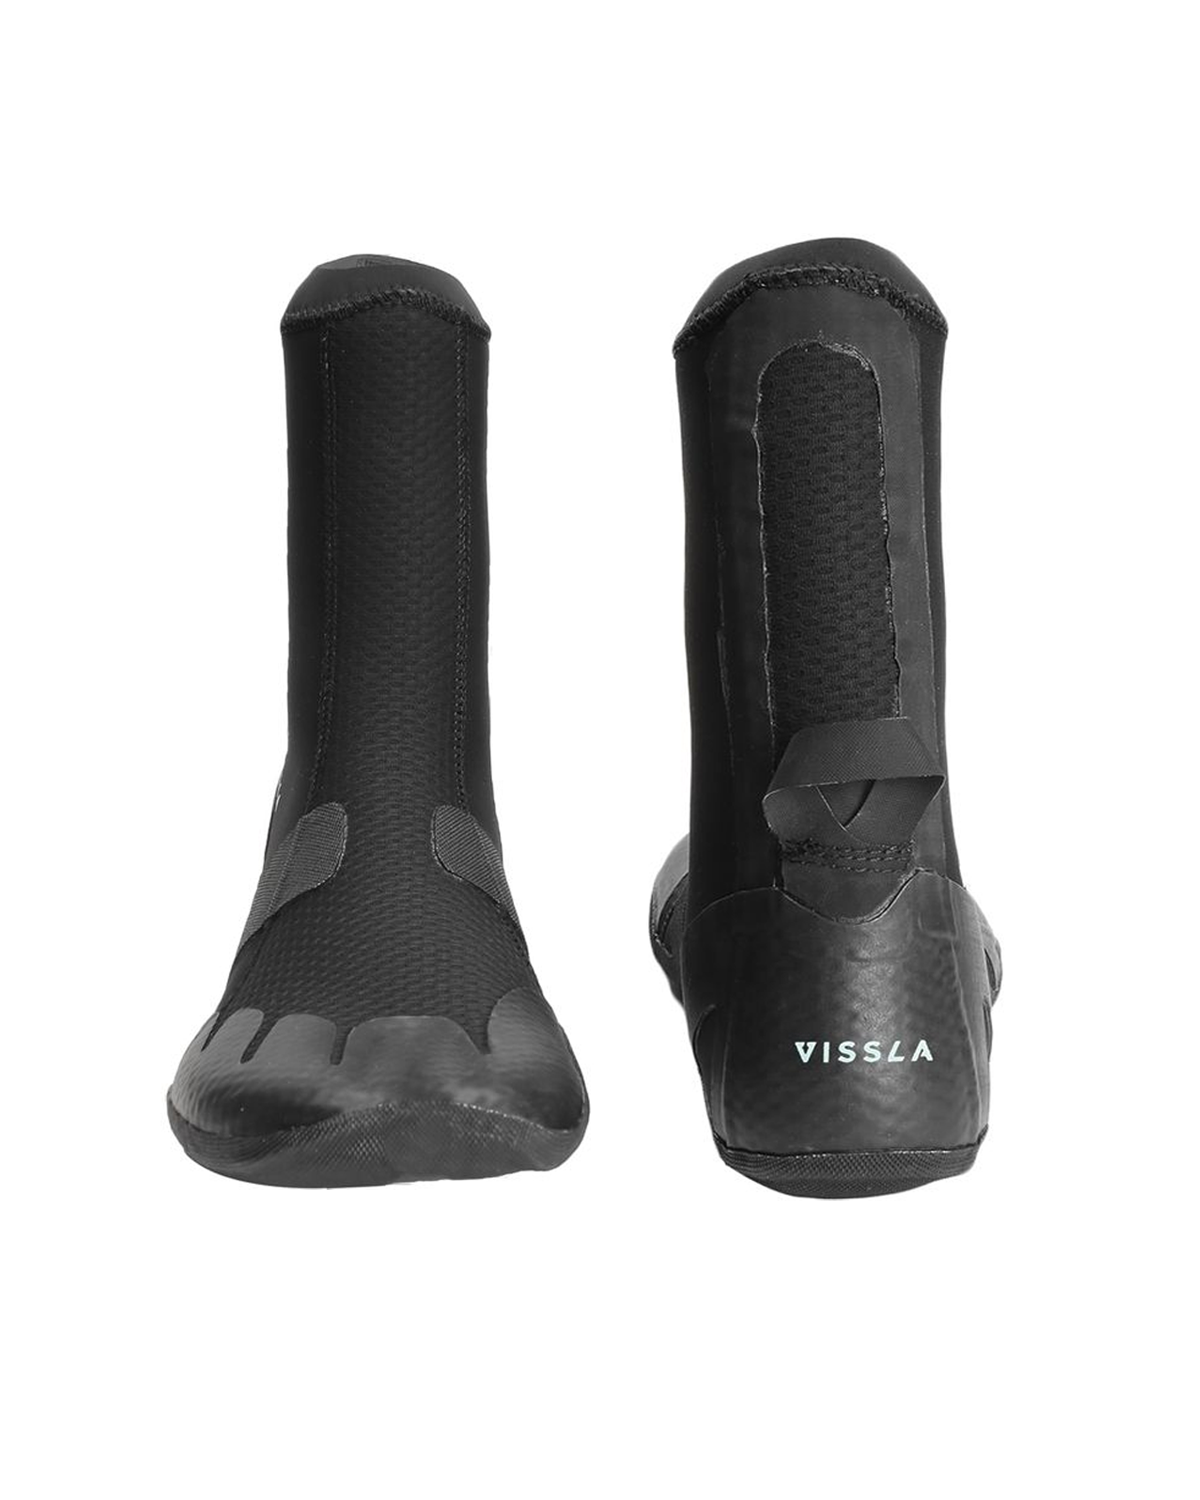 5mm Vissla HIGH SEAS Round Toe Wetsuit Boots